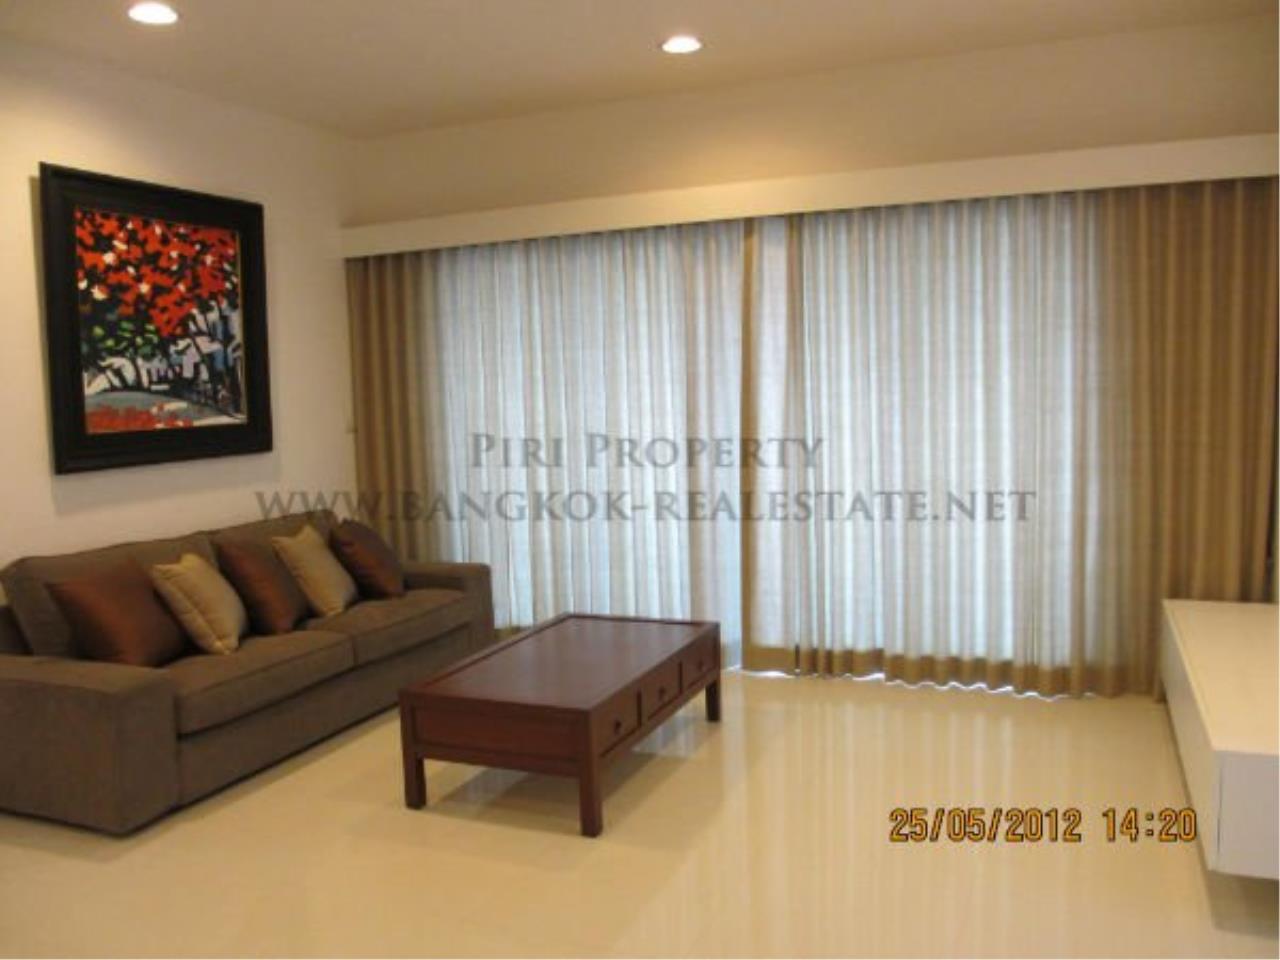 Piri Property Agency's Royal Maneeya Residences - Living the Renaissance Hotel Lifestyle - 2 Bedroom 1